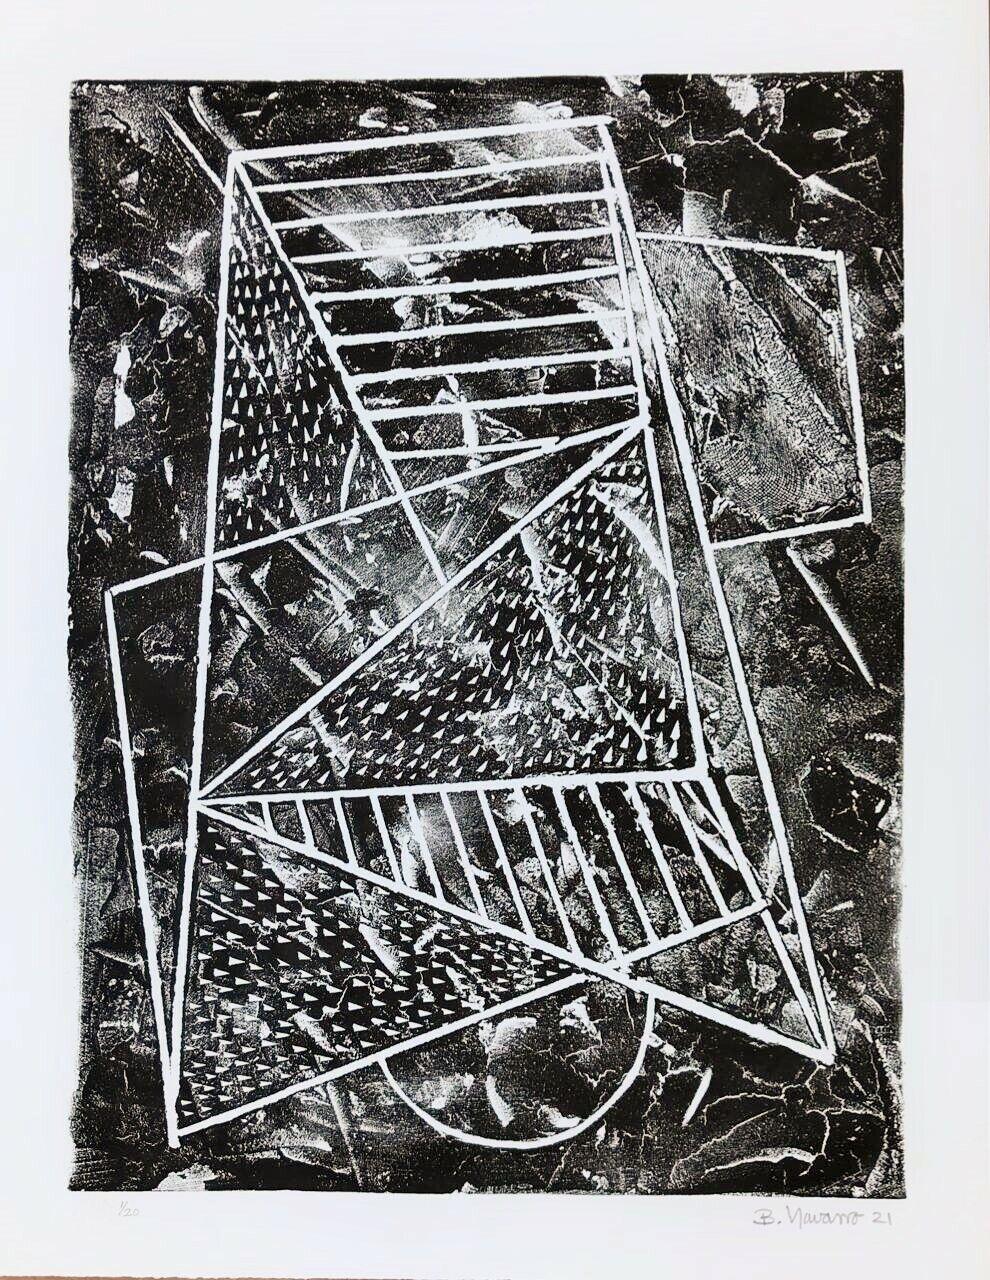 Bernardo Navarro Tomas (Cuba, 1977)
'Untitled (B/N vertical)', 2021
collagraph on paper Guarro Biblos 250g.
27.2 x 21.1 in. (69 x 53.5 cm.)
Edition of 20
ID: NAA-112
Unframed